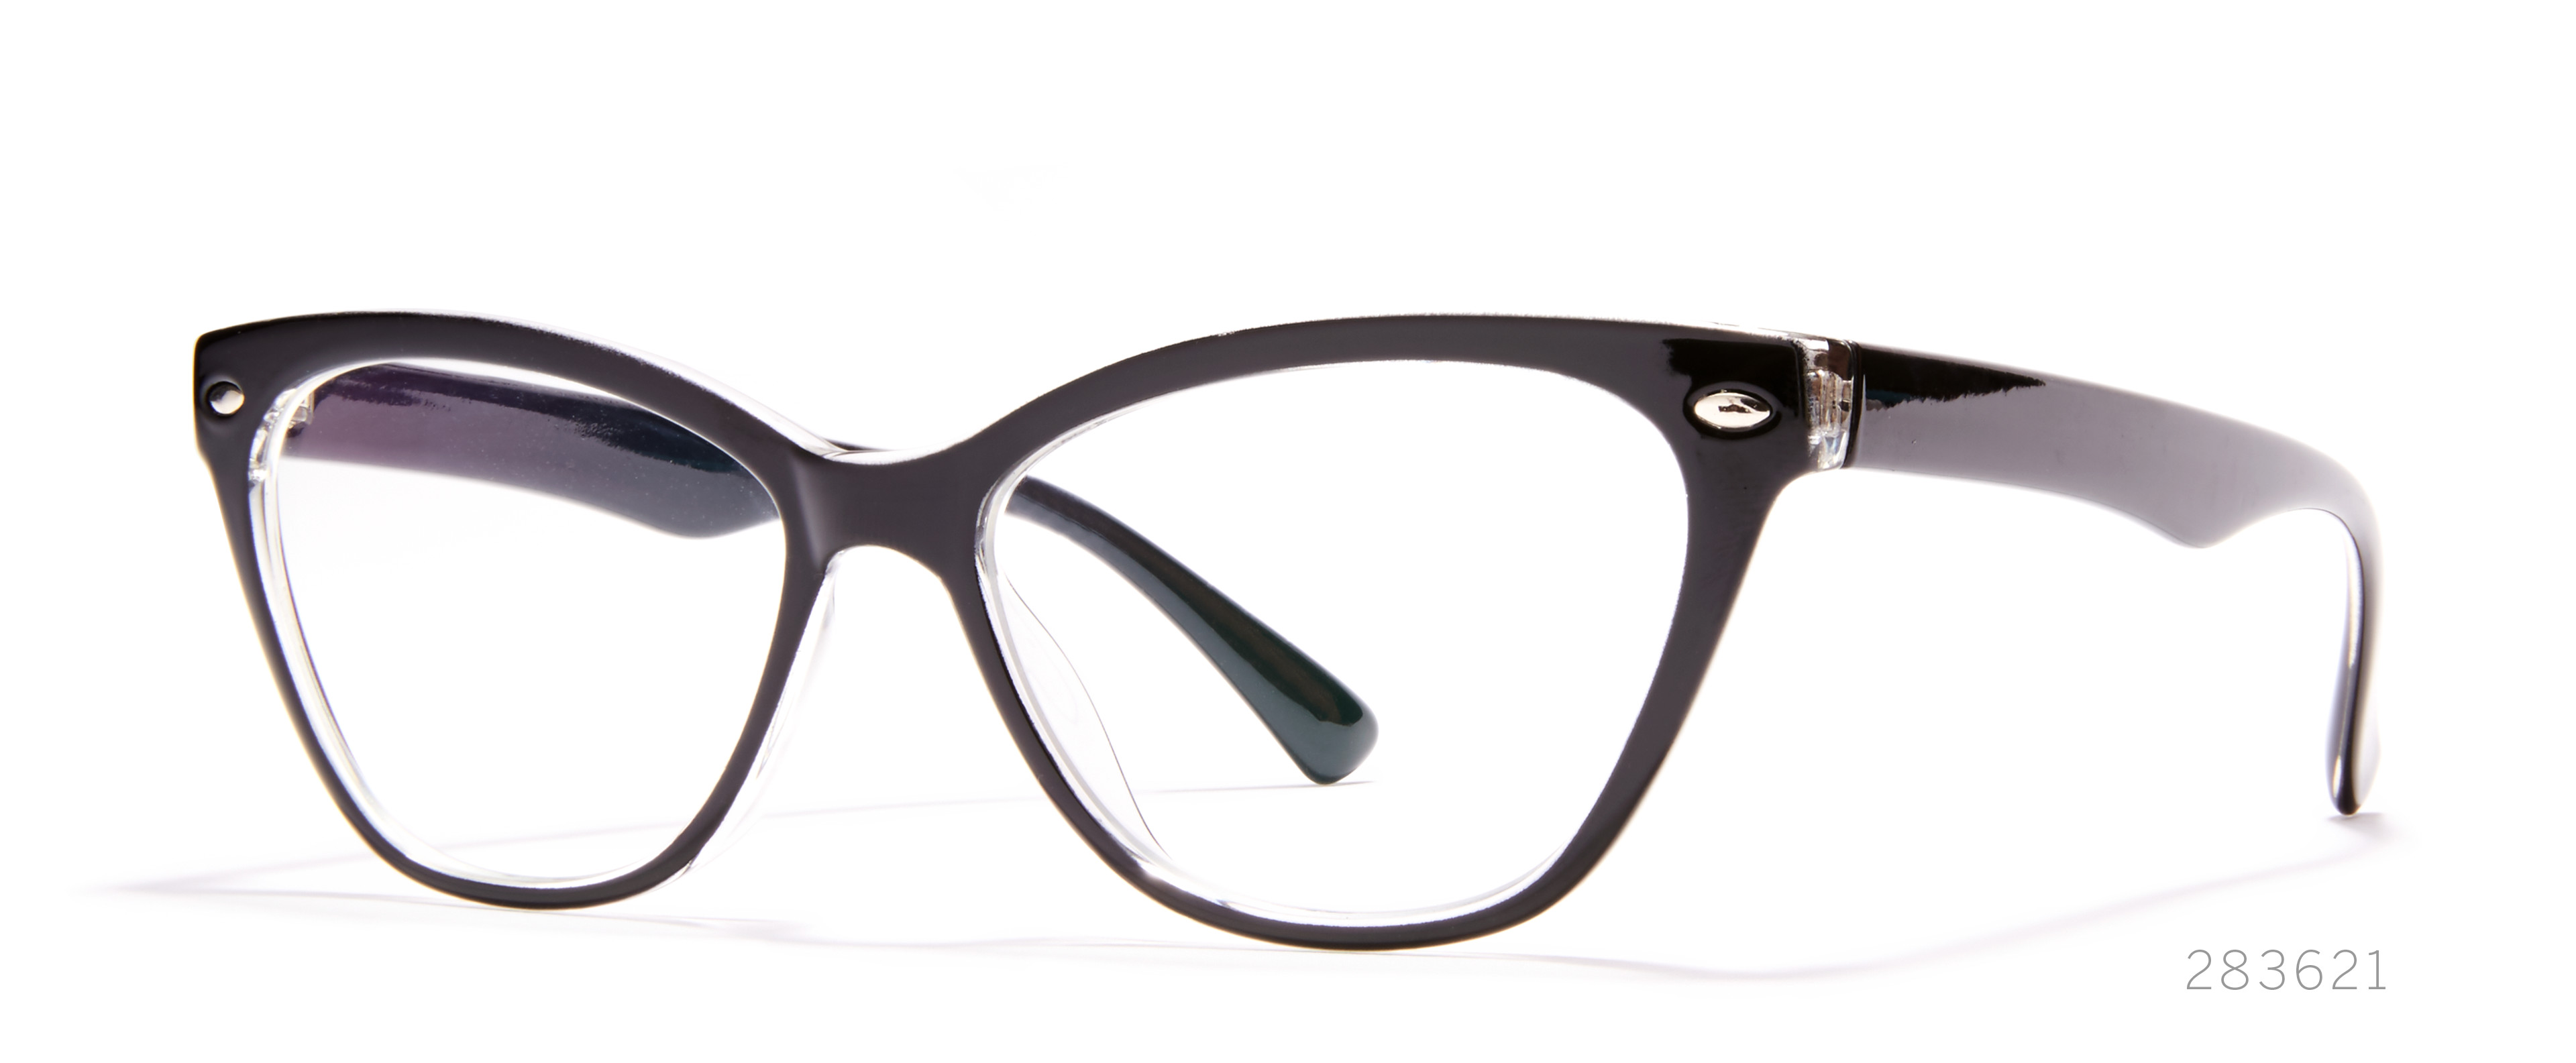 cateye statement glasses